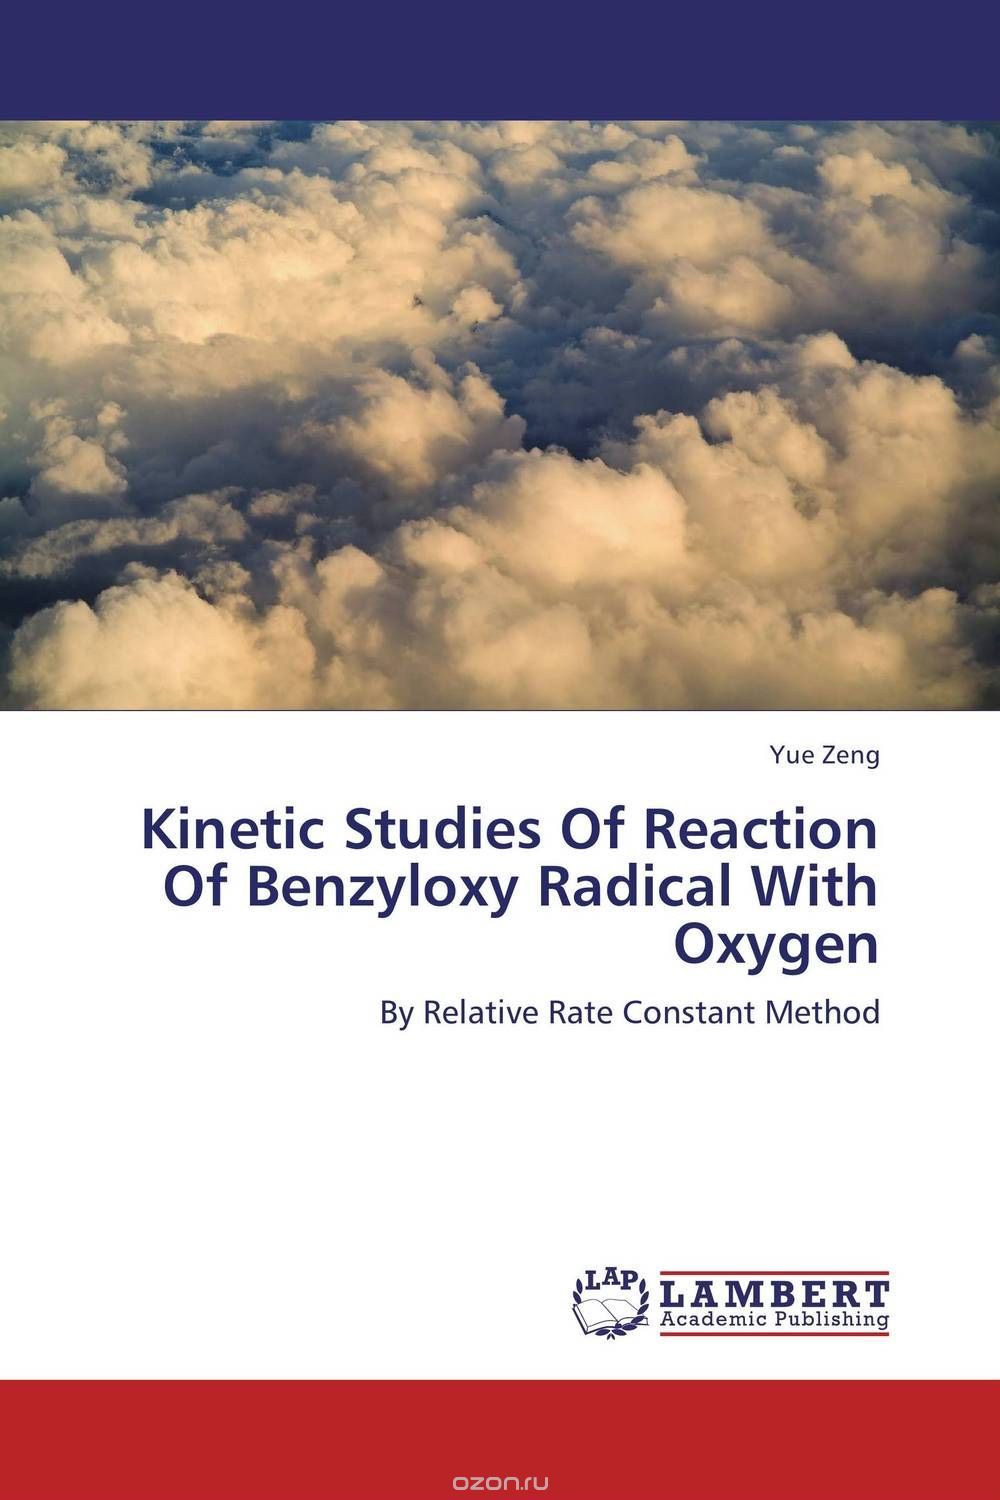 Скачать книгу "Kinetic Studies Of Reaction Of Benzyloxy Radical With Oxygen"